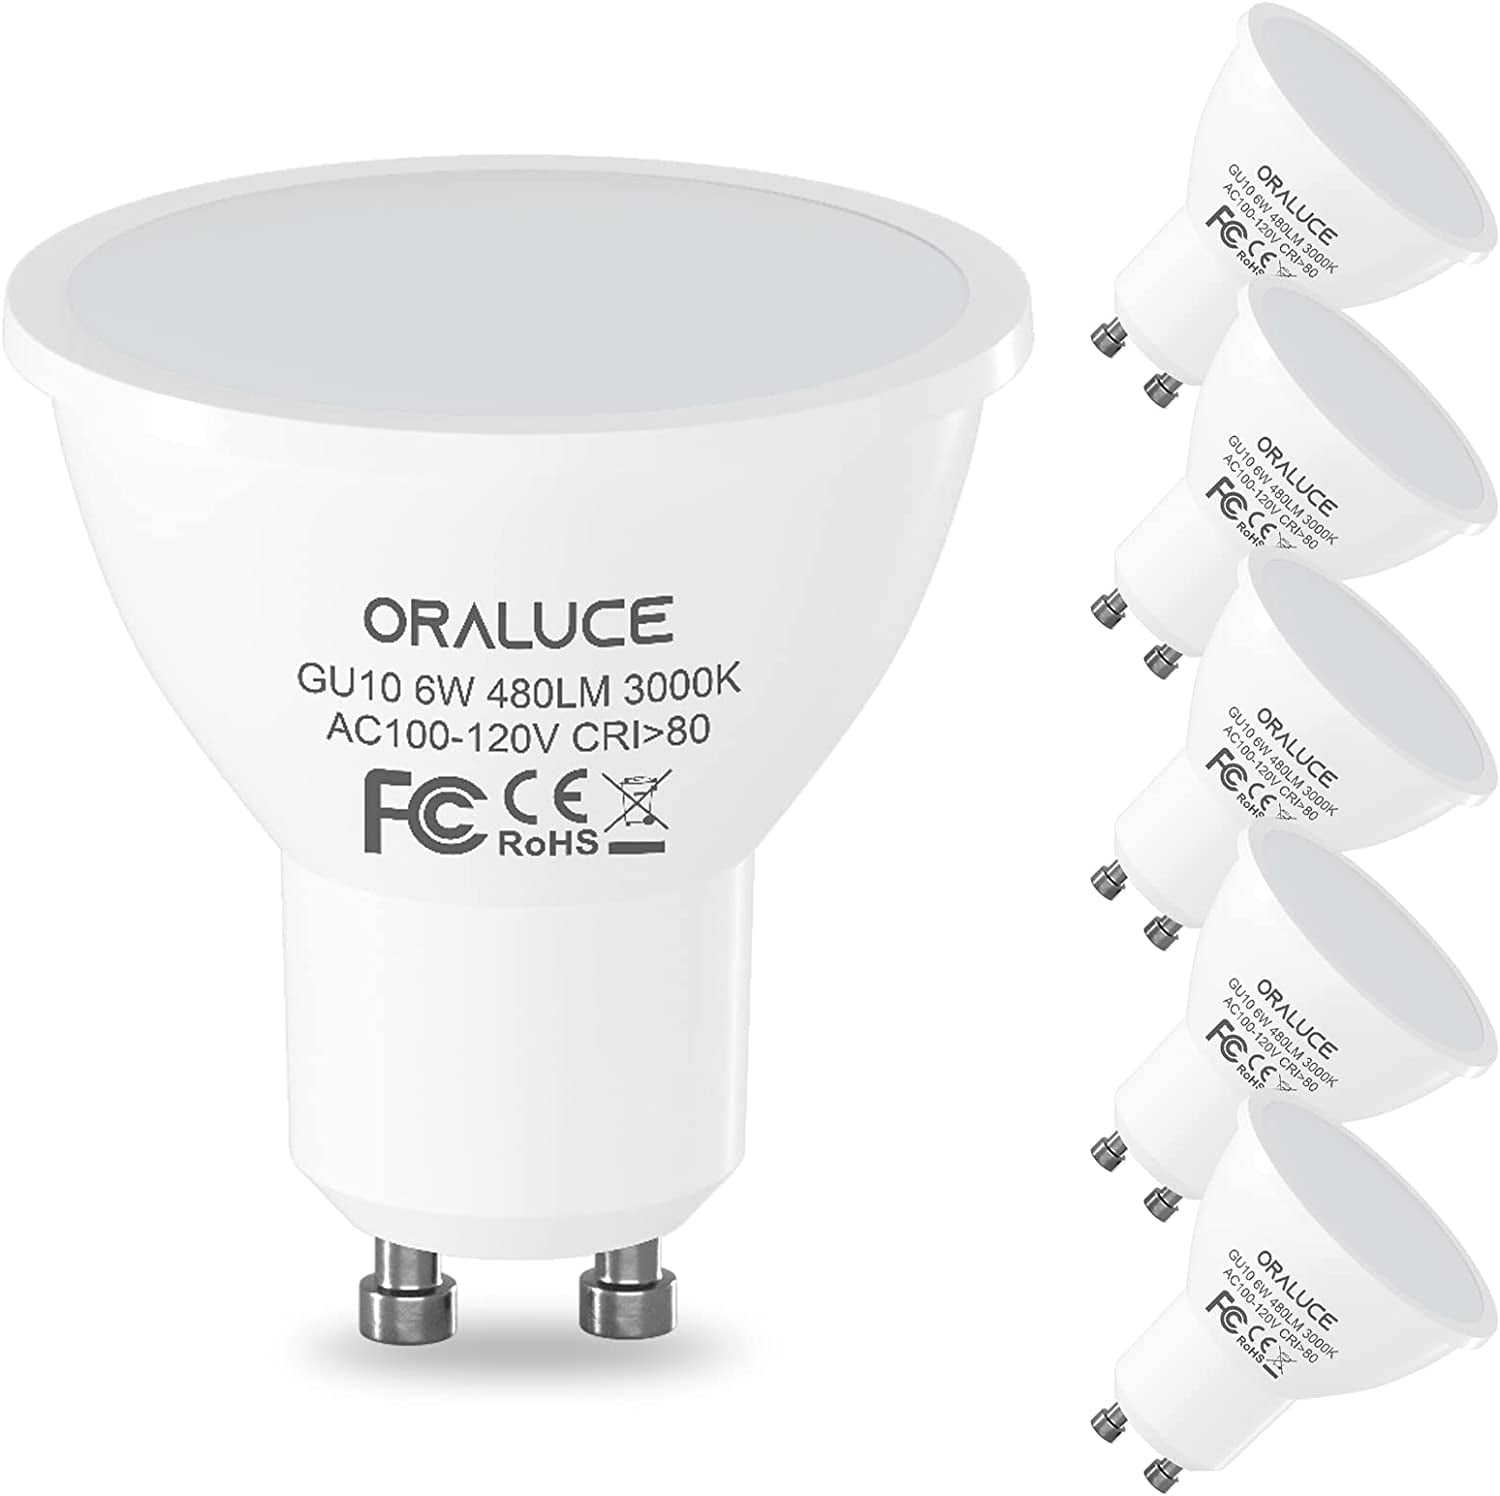 GU10 LED Bulbs, 6 Watt Equivalent to 50W Halogen Light Non-dimmable, 3000K Soft White,120 V, 480 Lm, Beam Angle, MR16 Shape for Recessed, Track Lighting, Pack of 6 - Walmart.com